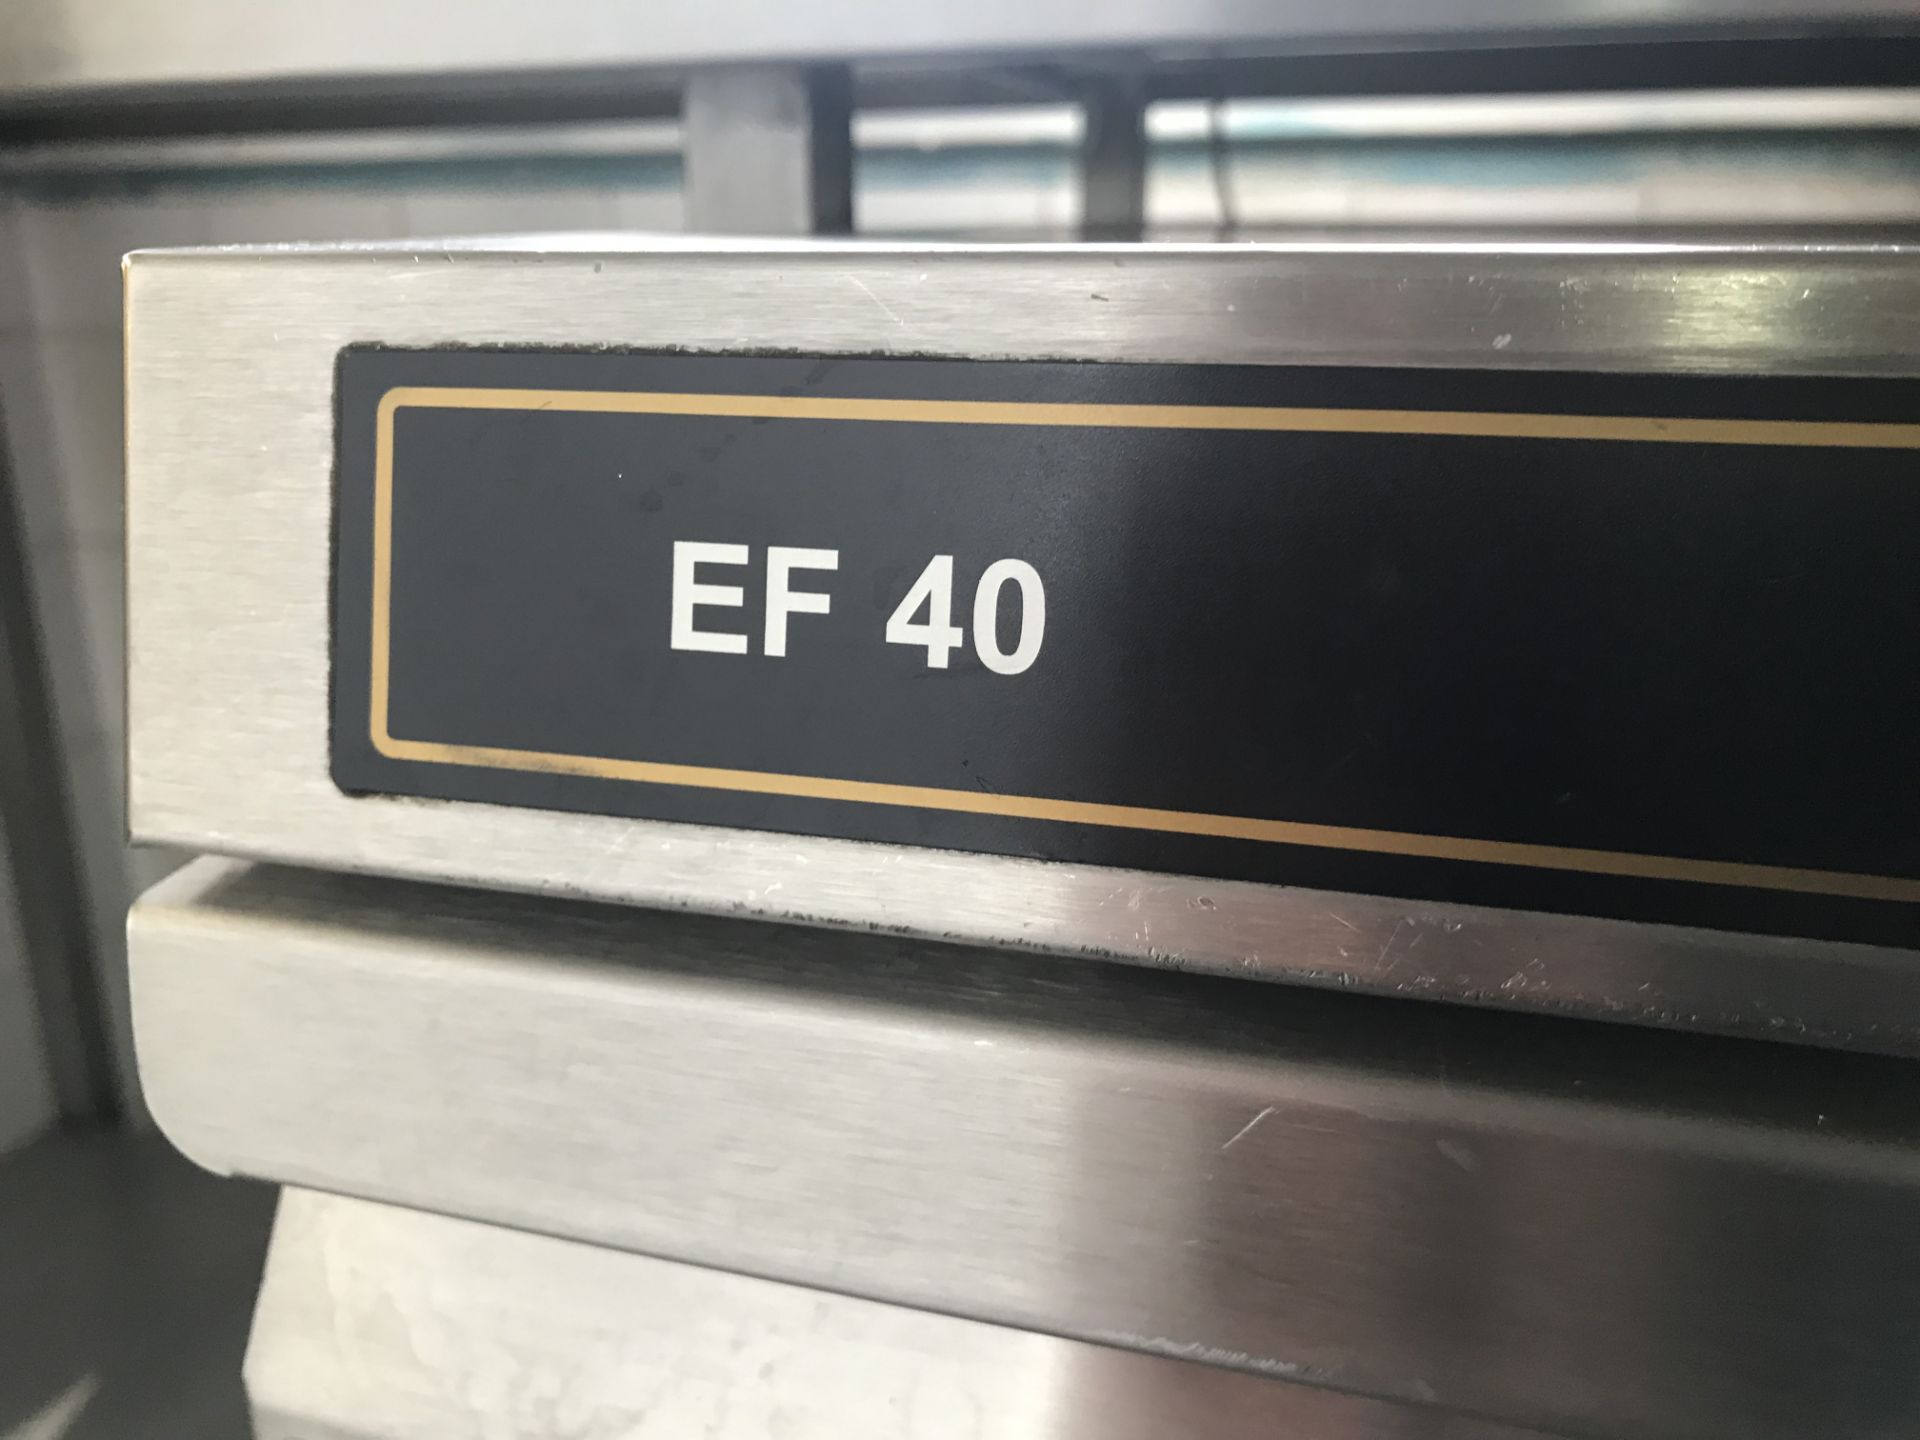 Hobart EF40 Stainless Steel Commercial Dishwasher - Image 3 of 5